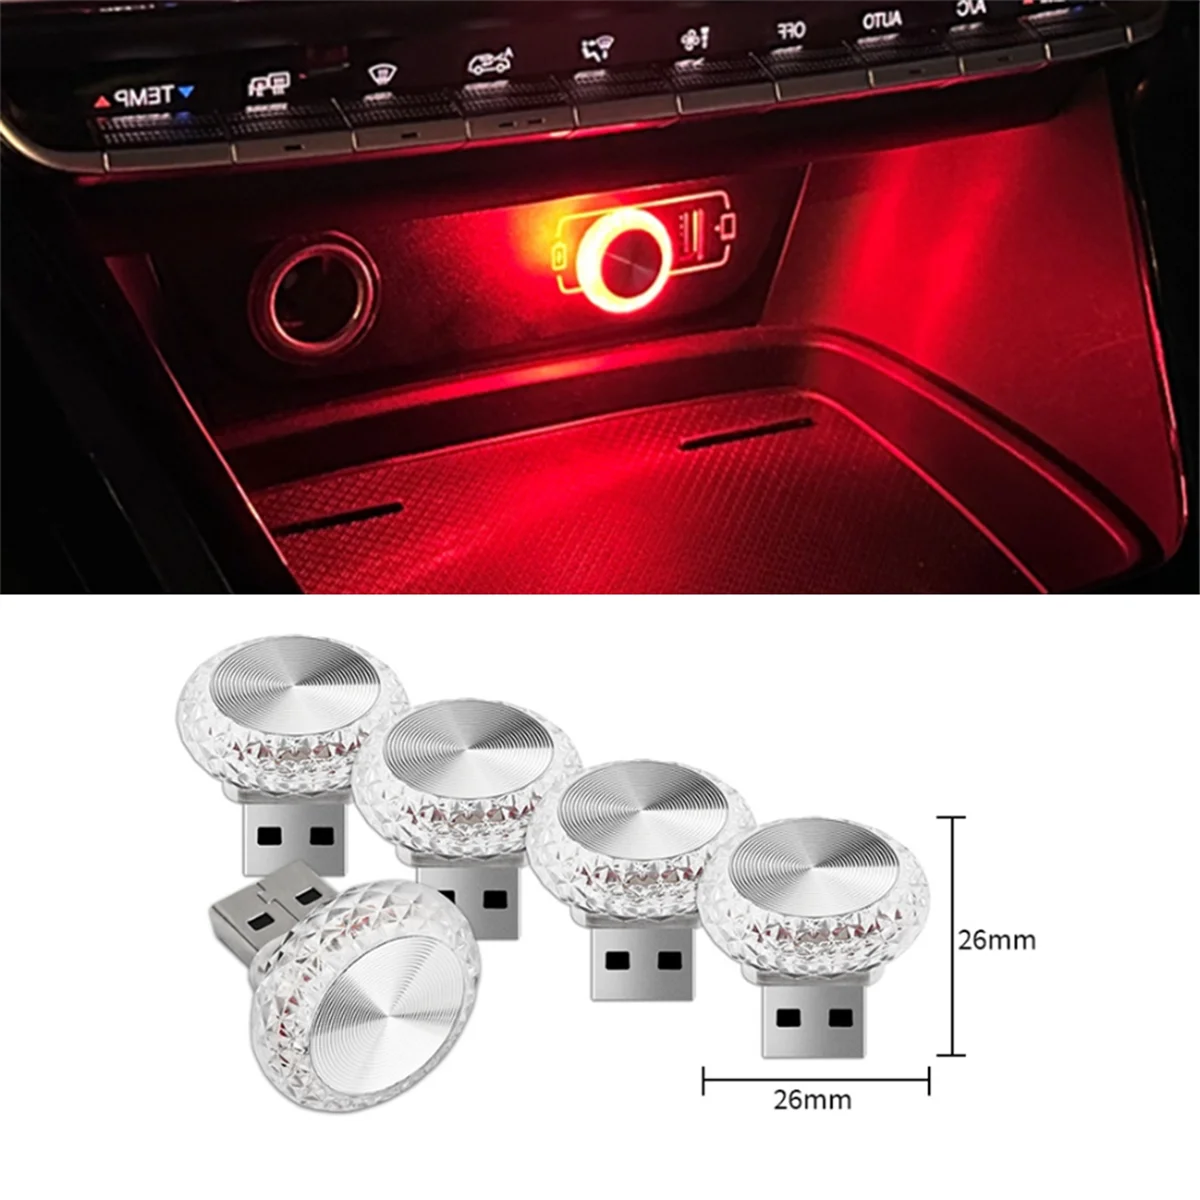 

10X Car USB Ambient Light Mini LED Interior Decorative Lamp for Party DJ Vehicle Universal Auto D